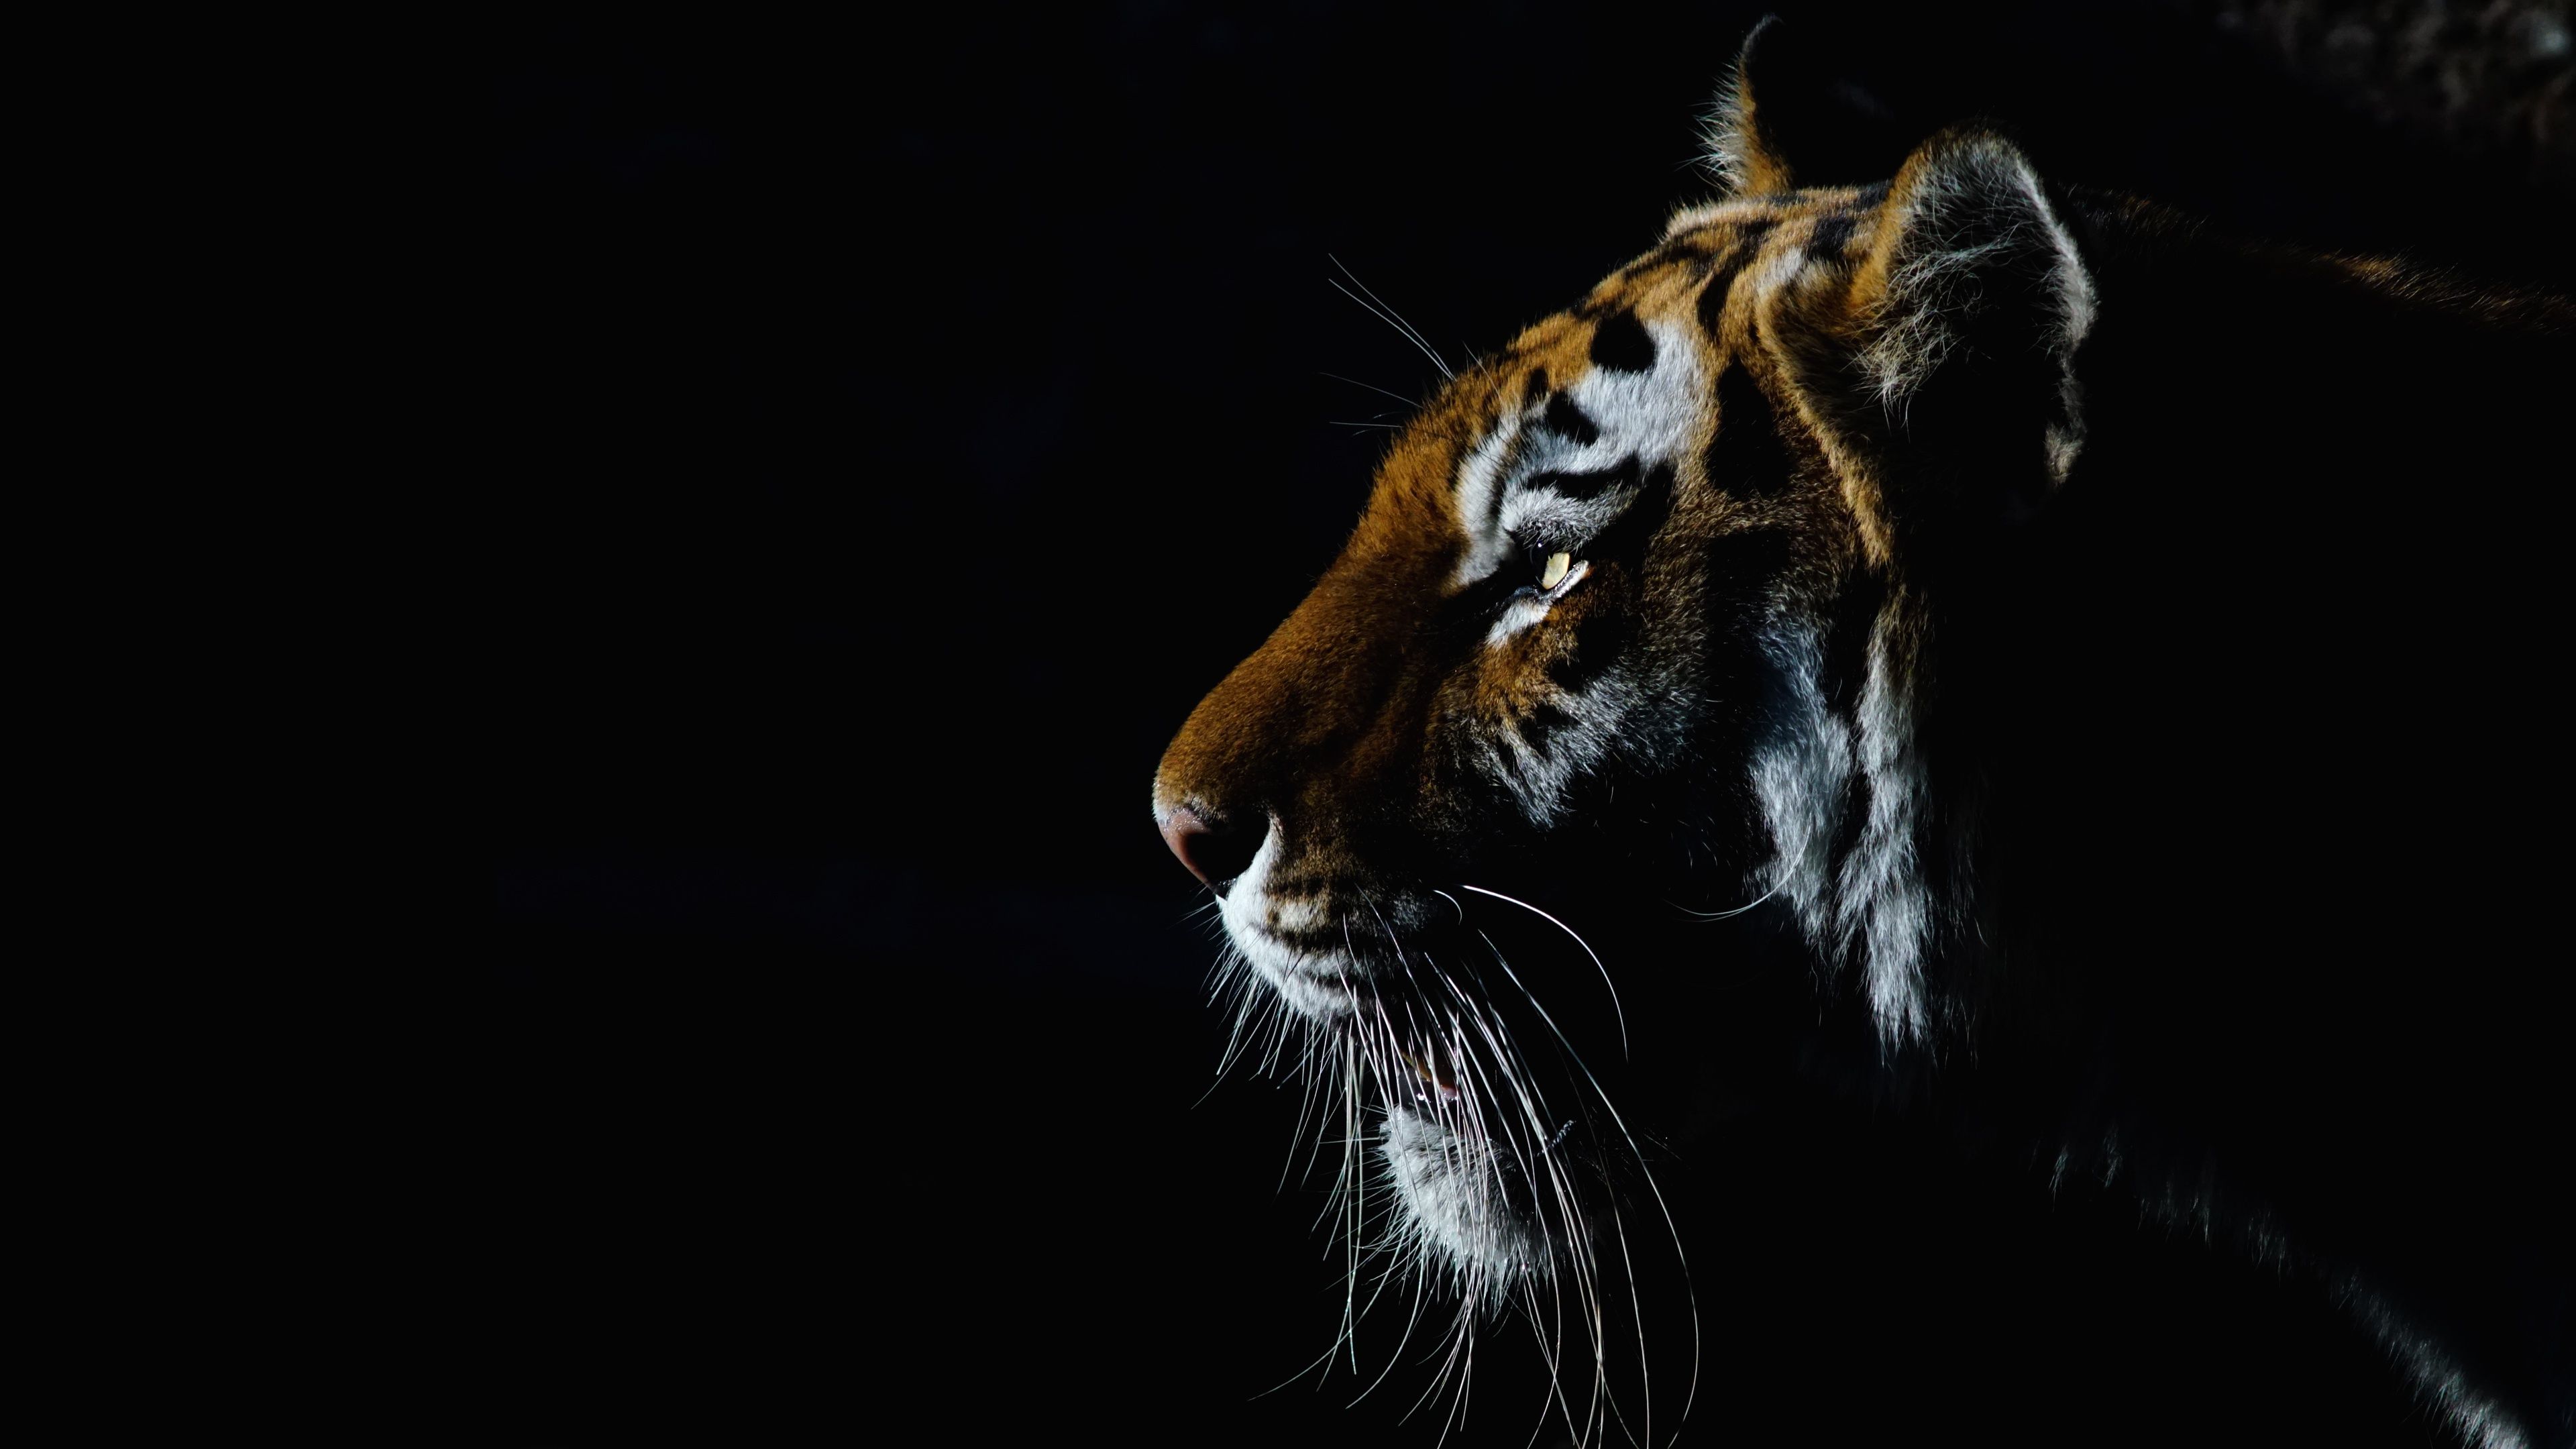 Tiger 4K Wallpaper, Closeup, Dark, Black background, Big cat, Animals